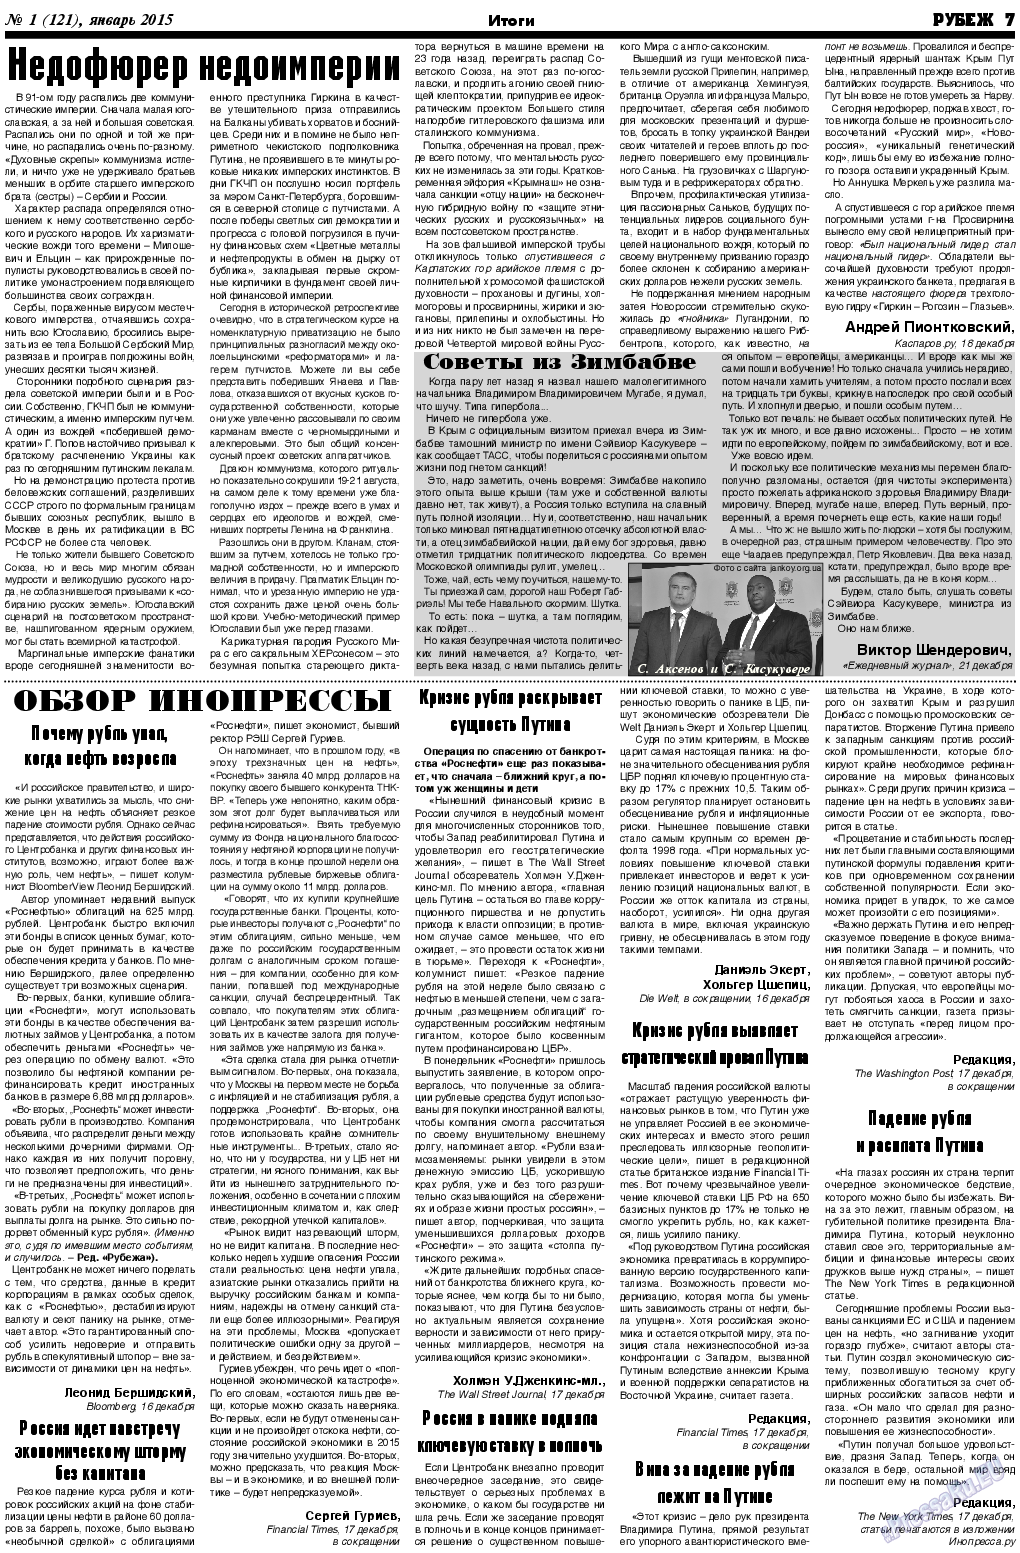 Рубеж, газета. 2015 №1 стр.7